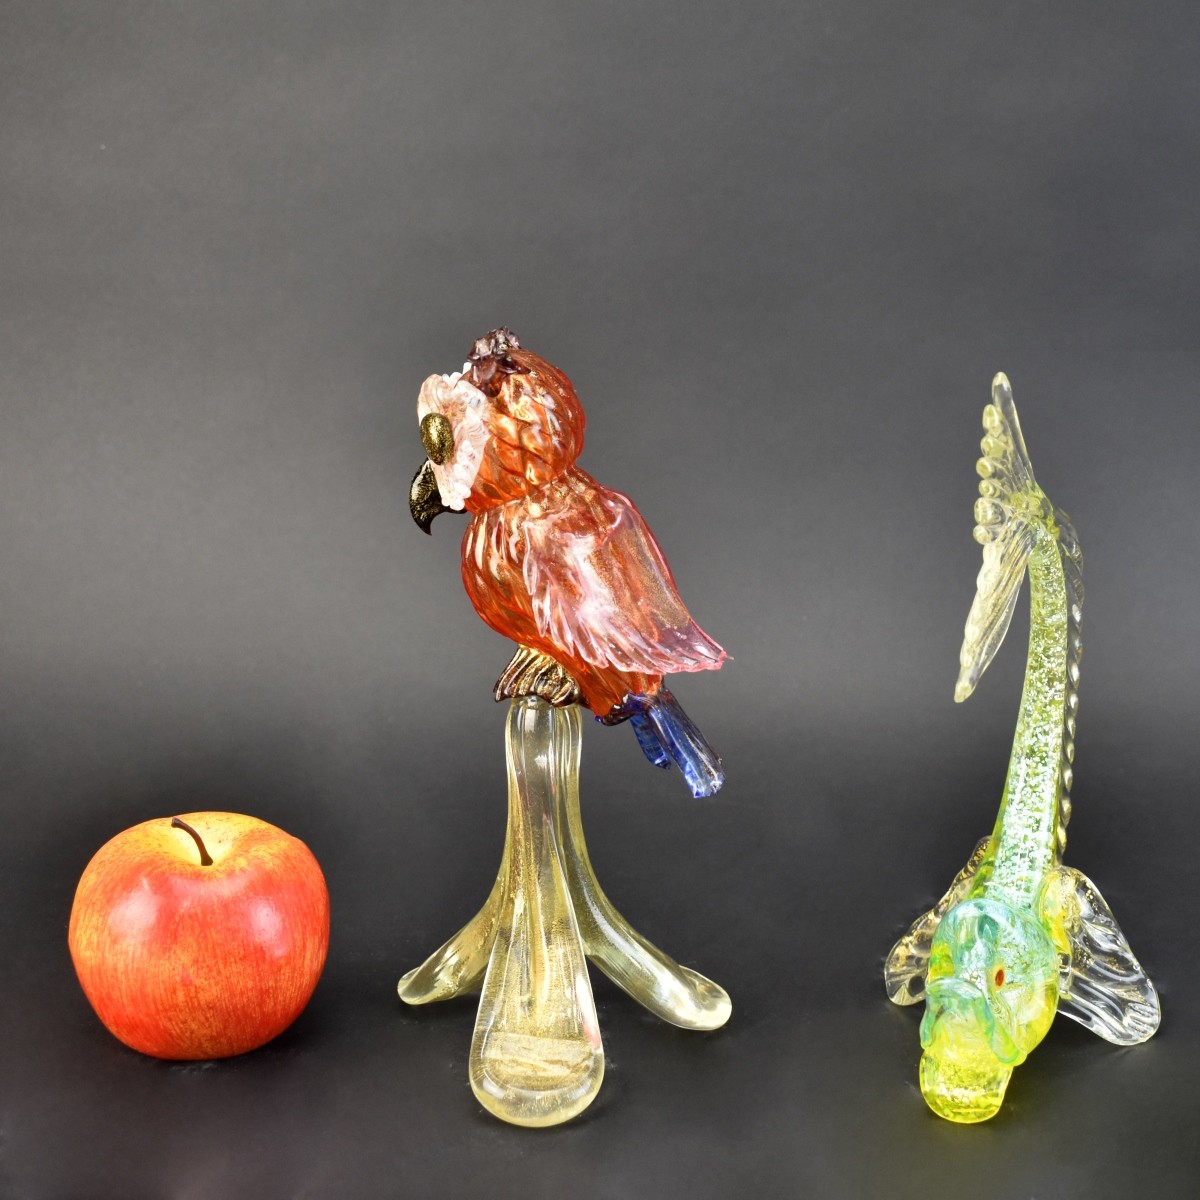 2 pieces Murano Art Glass Figurines